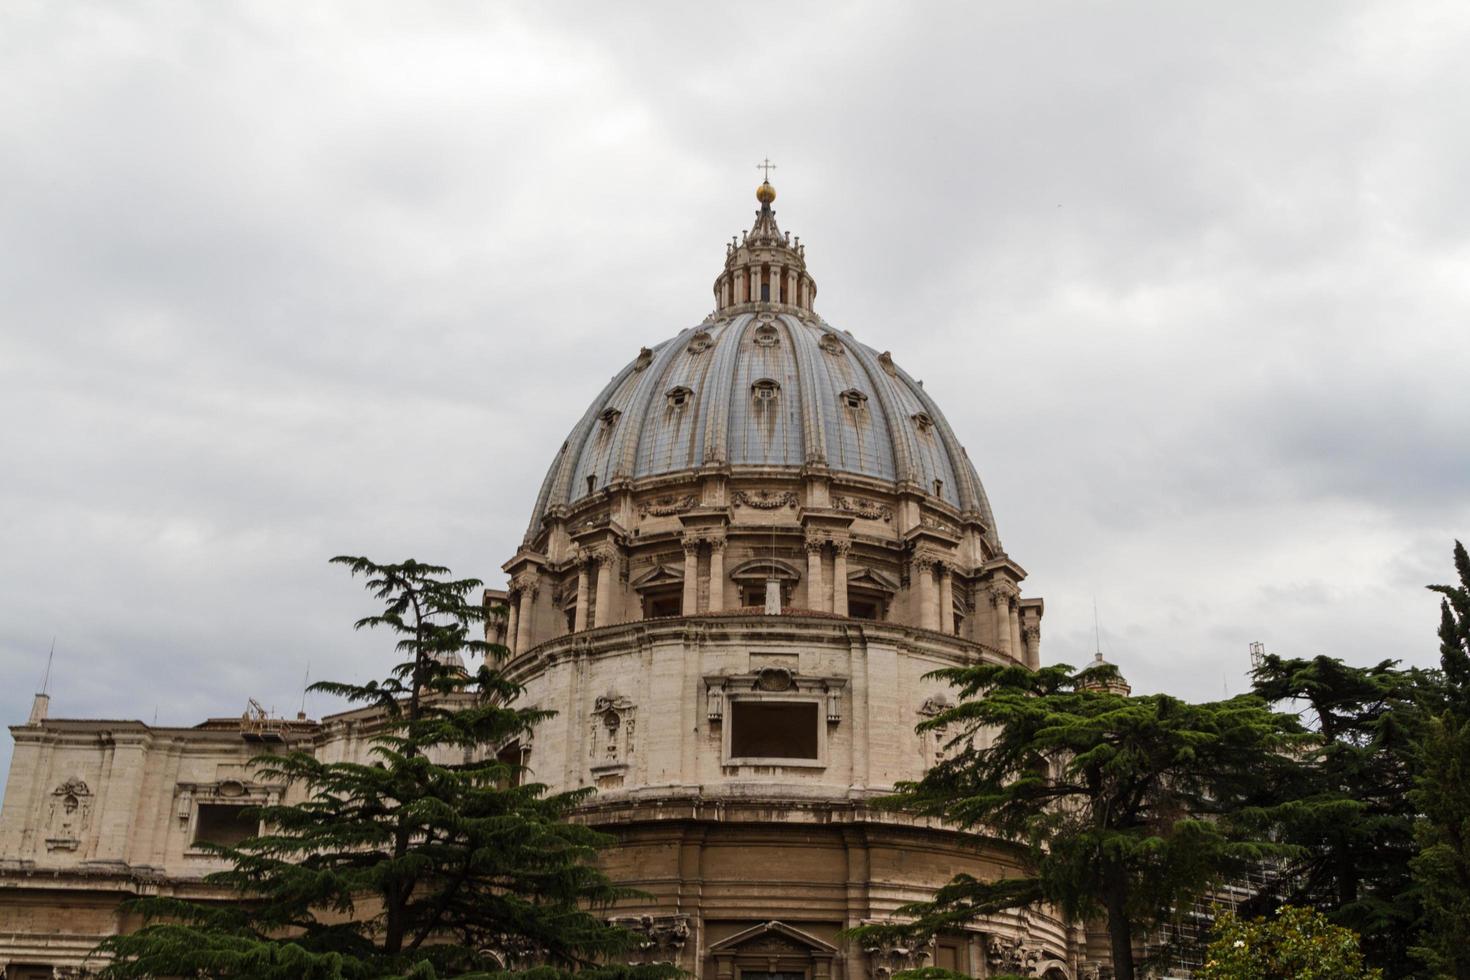 basilica di san pietro, vaticaanstad, rome, italië foto